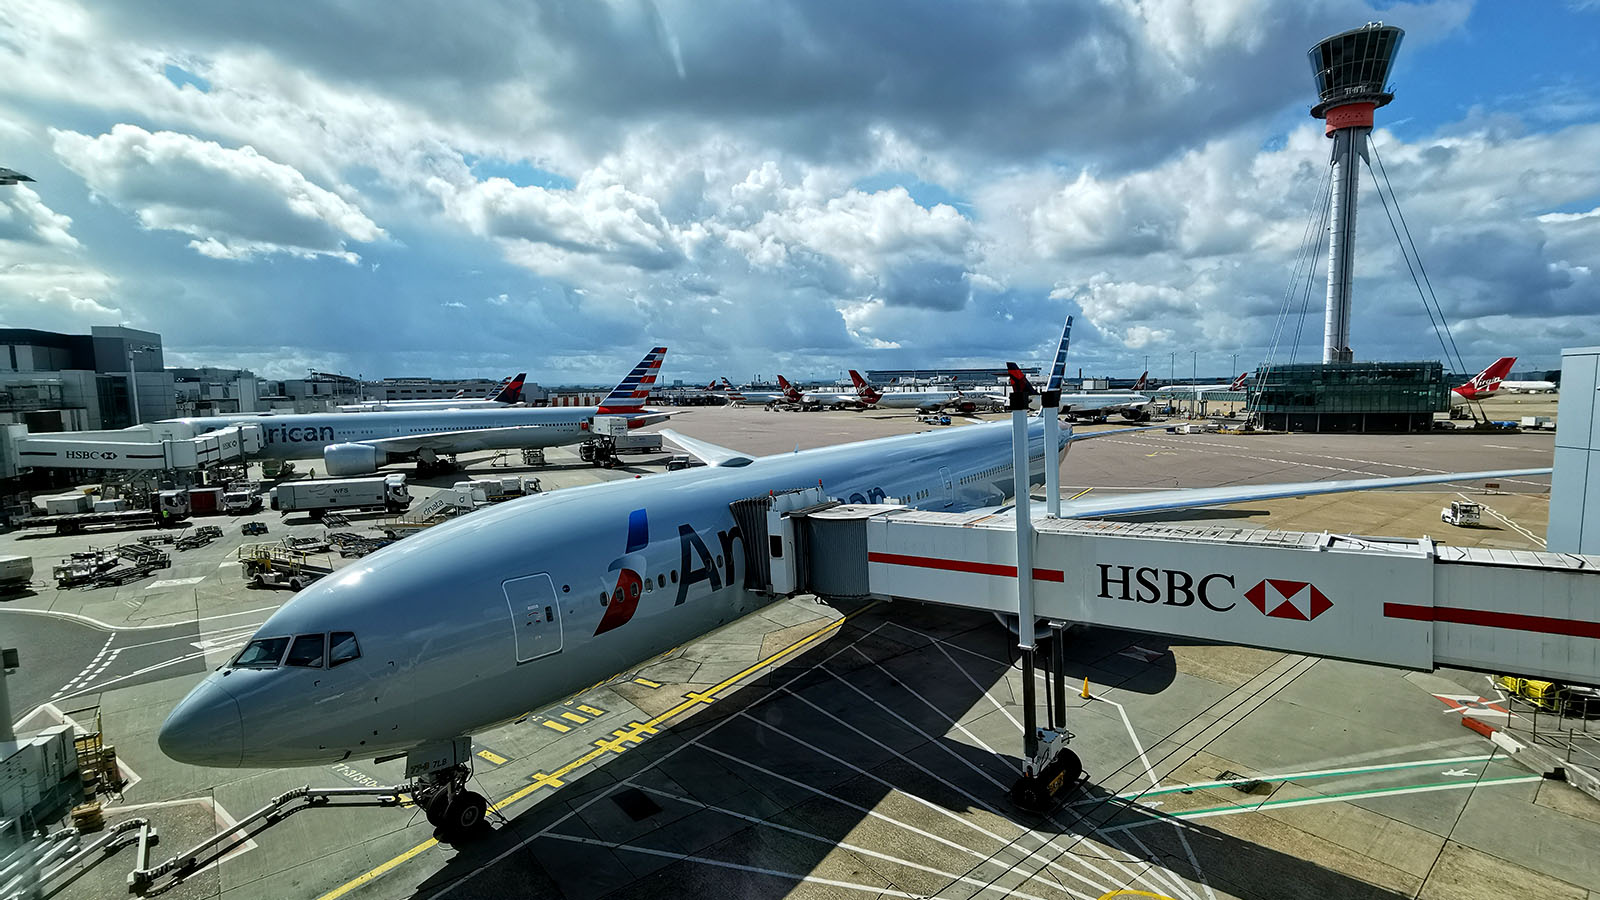 Aircraft exterior in American Airlines Premium Economy